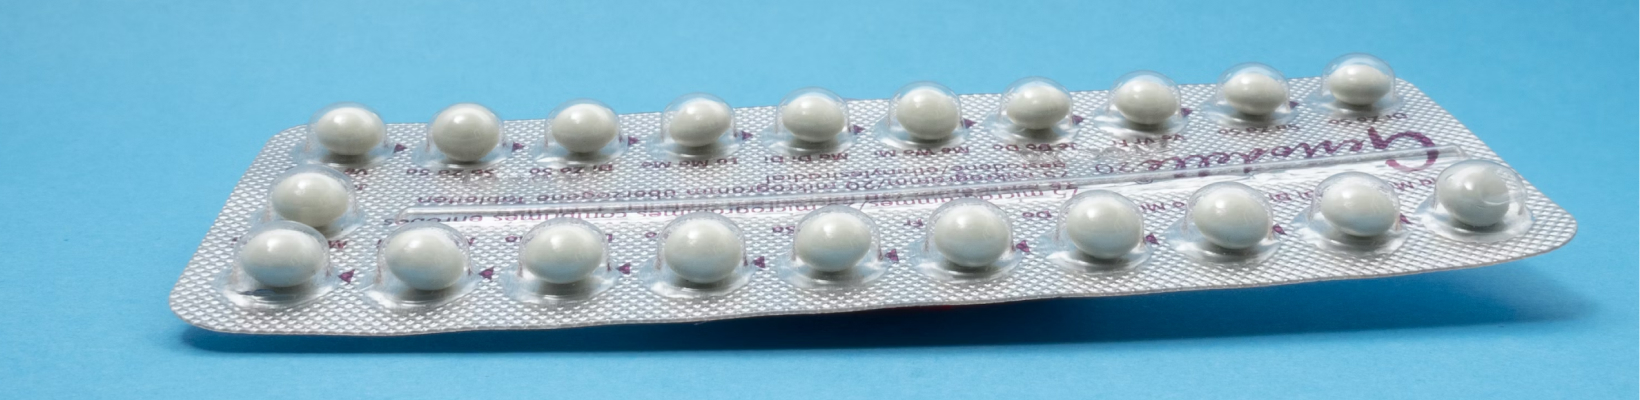 Метод контрацепции может влиять на перхоть?